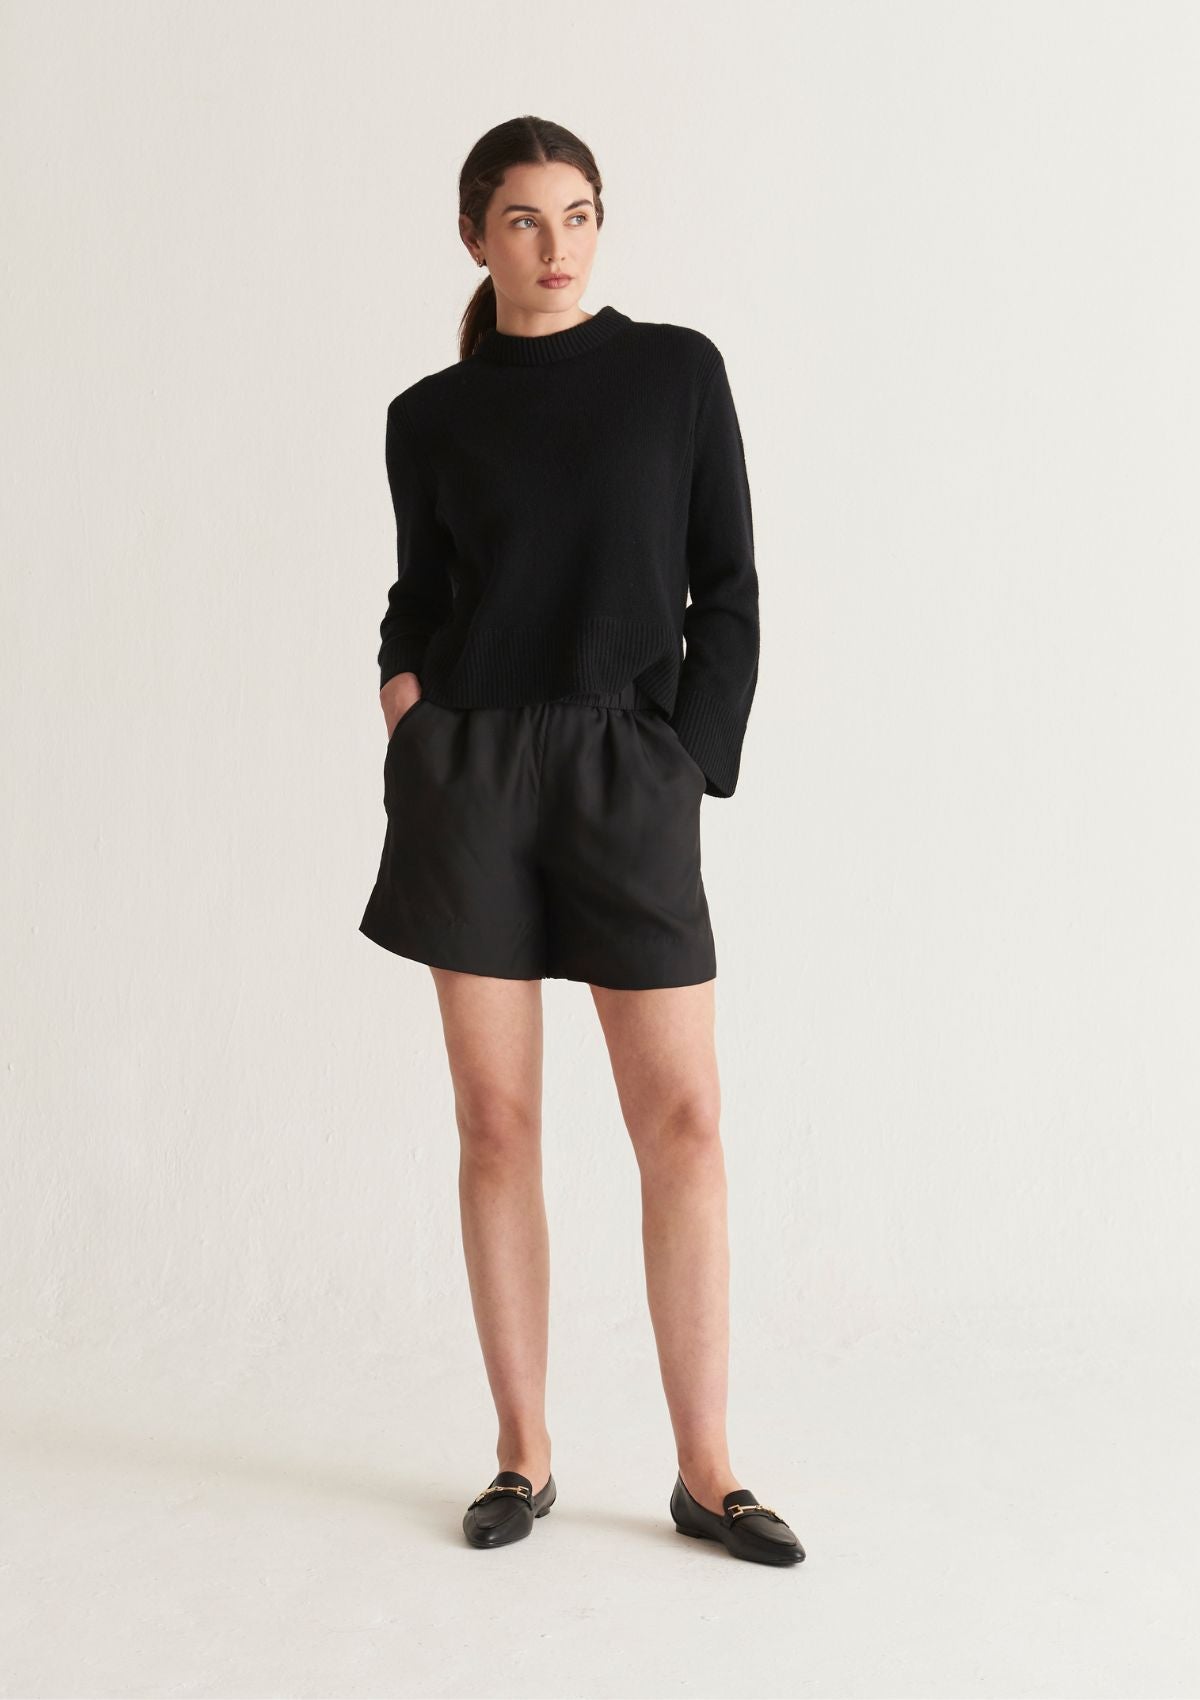 Cropped Cashmere Sweatshirt in Black